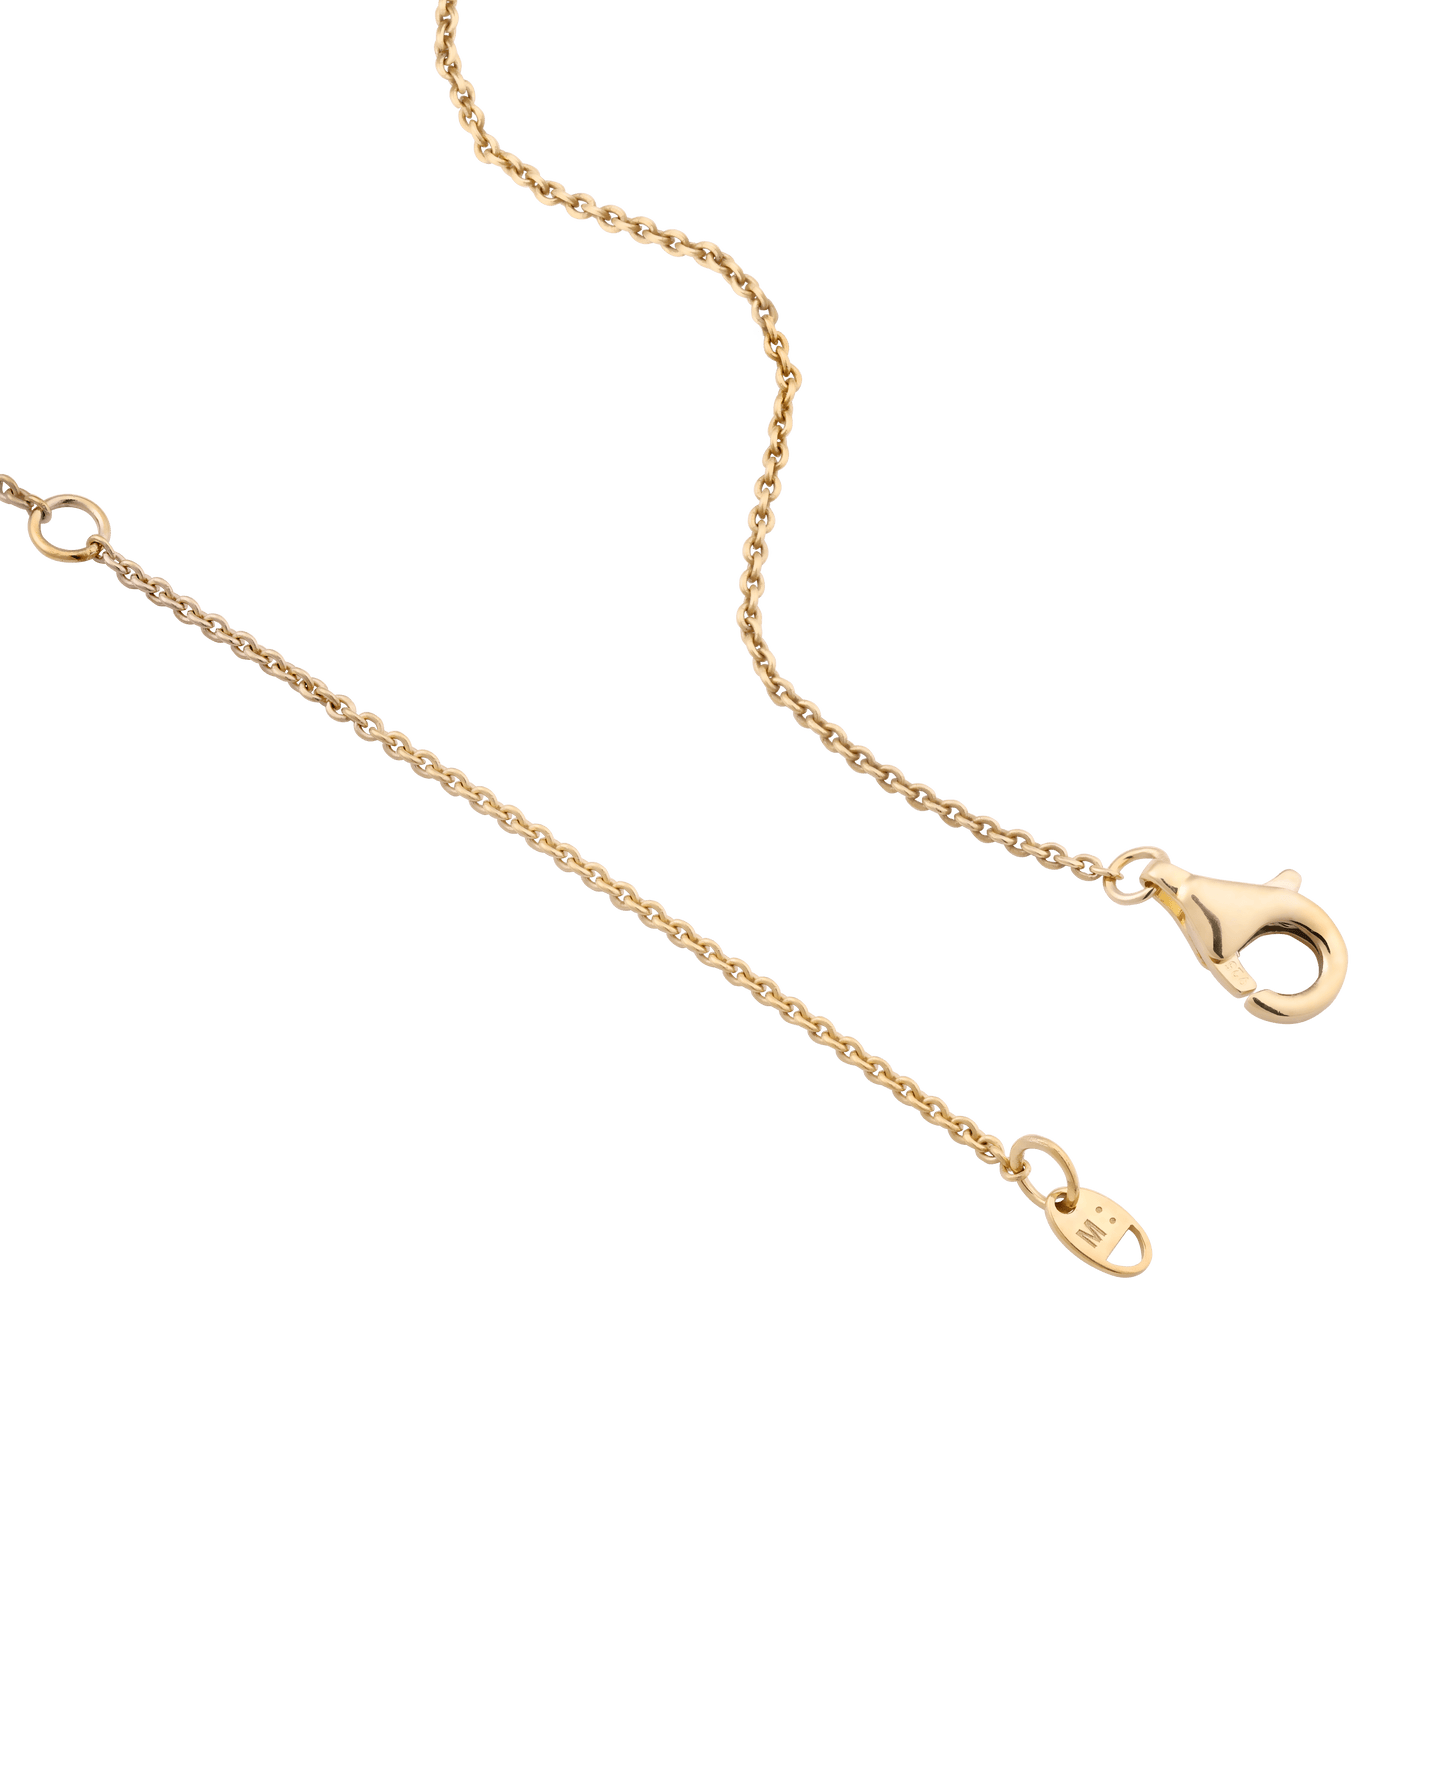 Emerald Solitaire Diamond Bracelet - 14K White Gold Bracelets magal-dev 